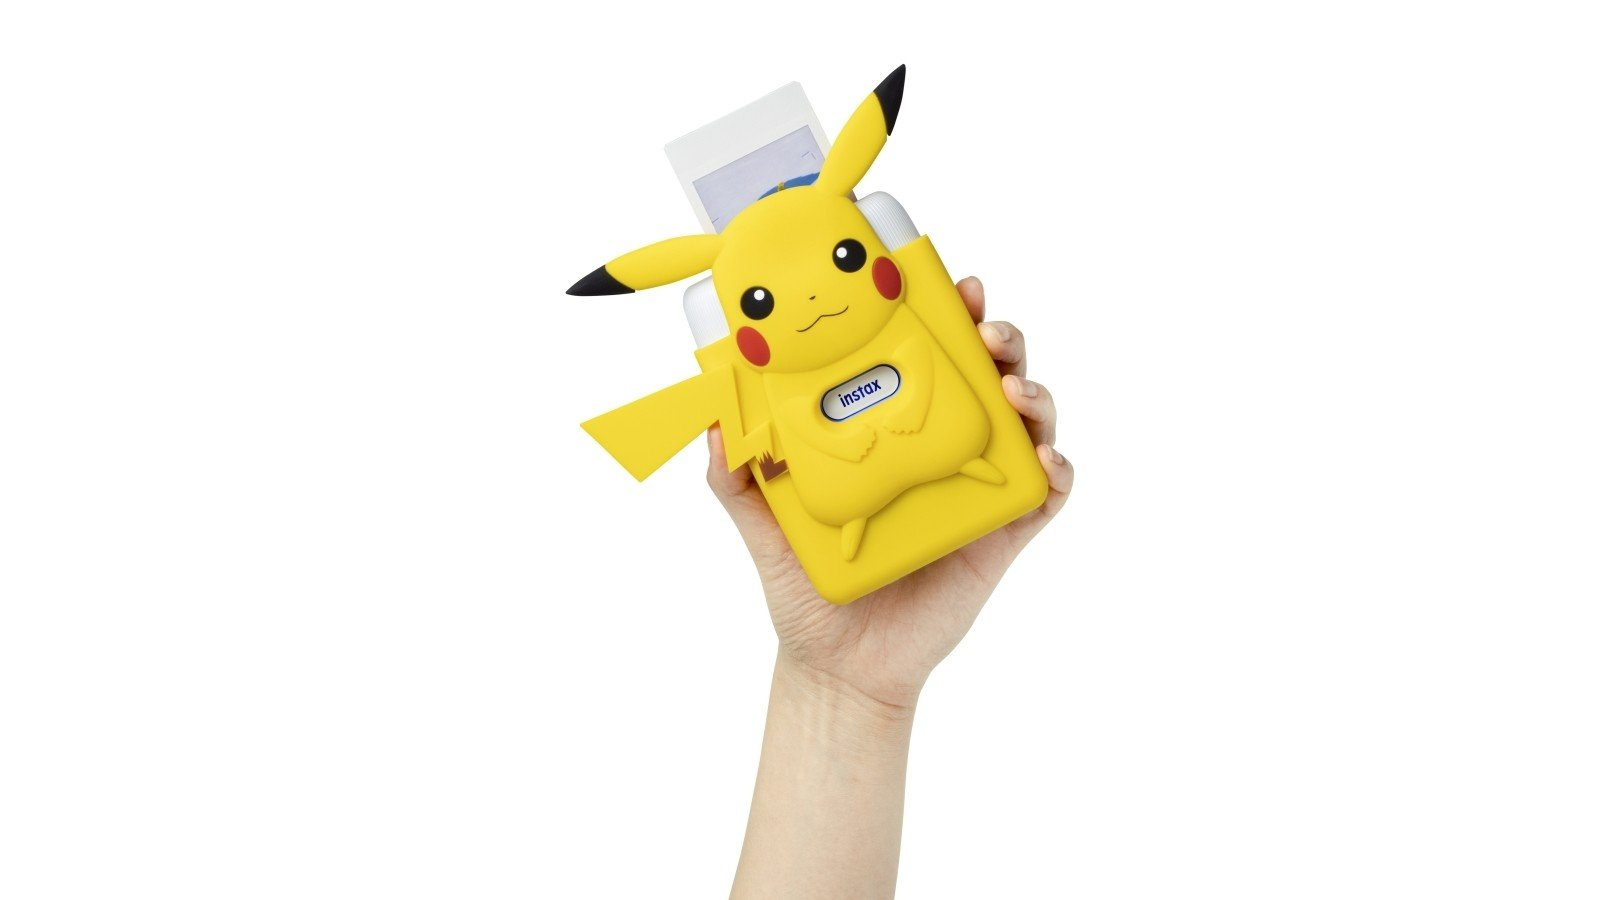 Fuji - Instax Mini link Compact Photo Printer - Pokemon Special Bundle Kit